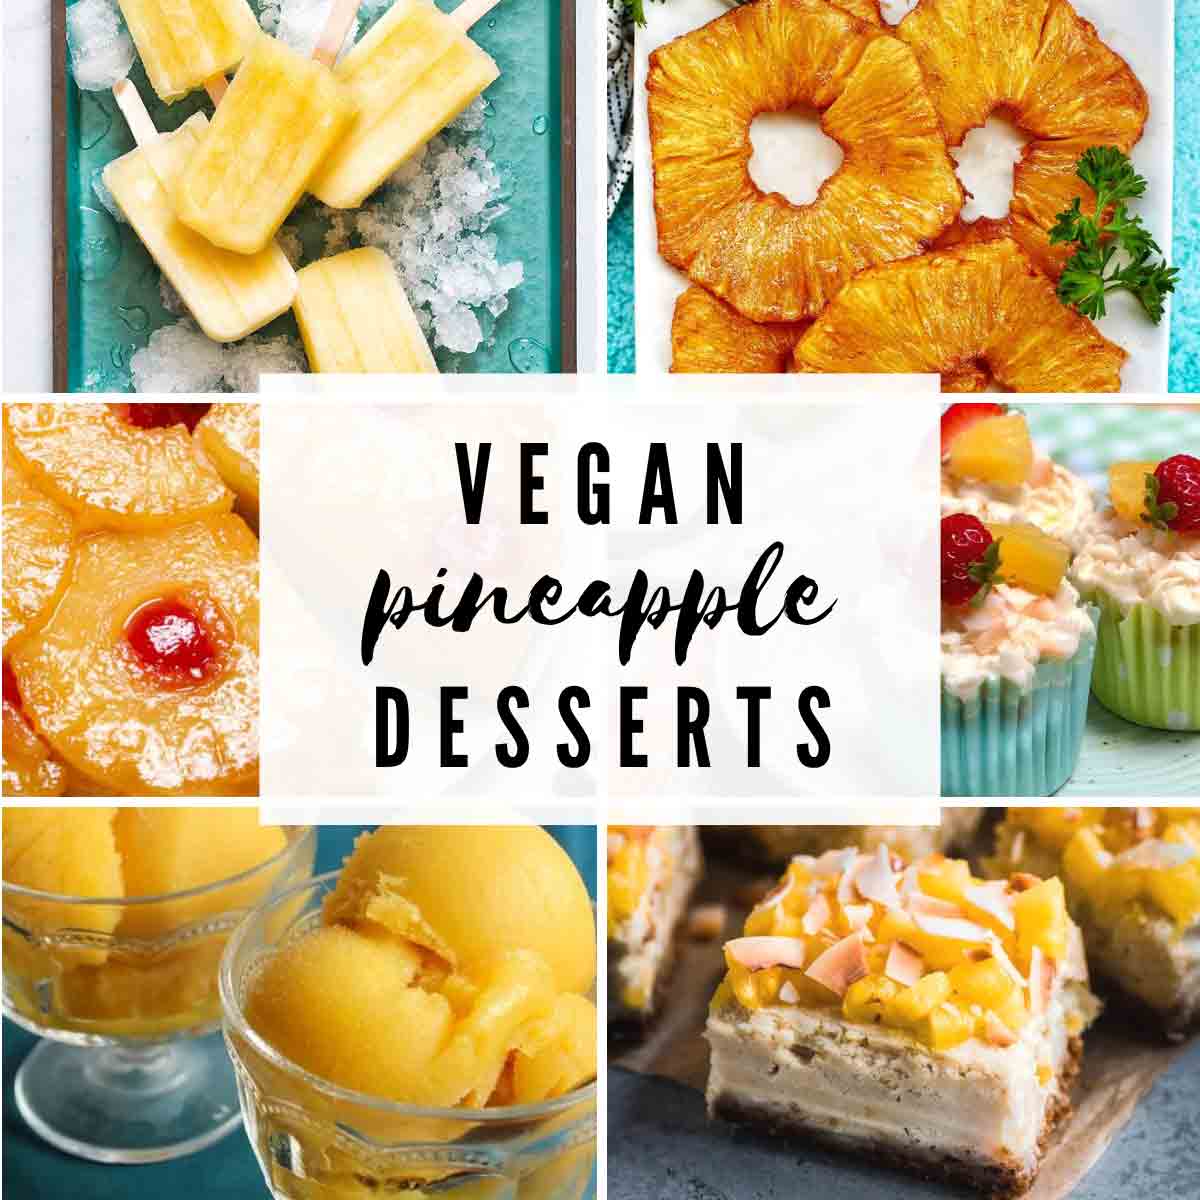 Image Collage Of Vegan Pineapple Desserts